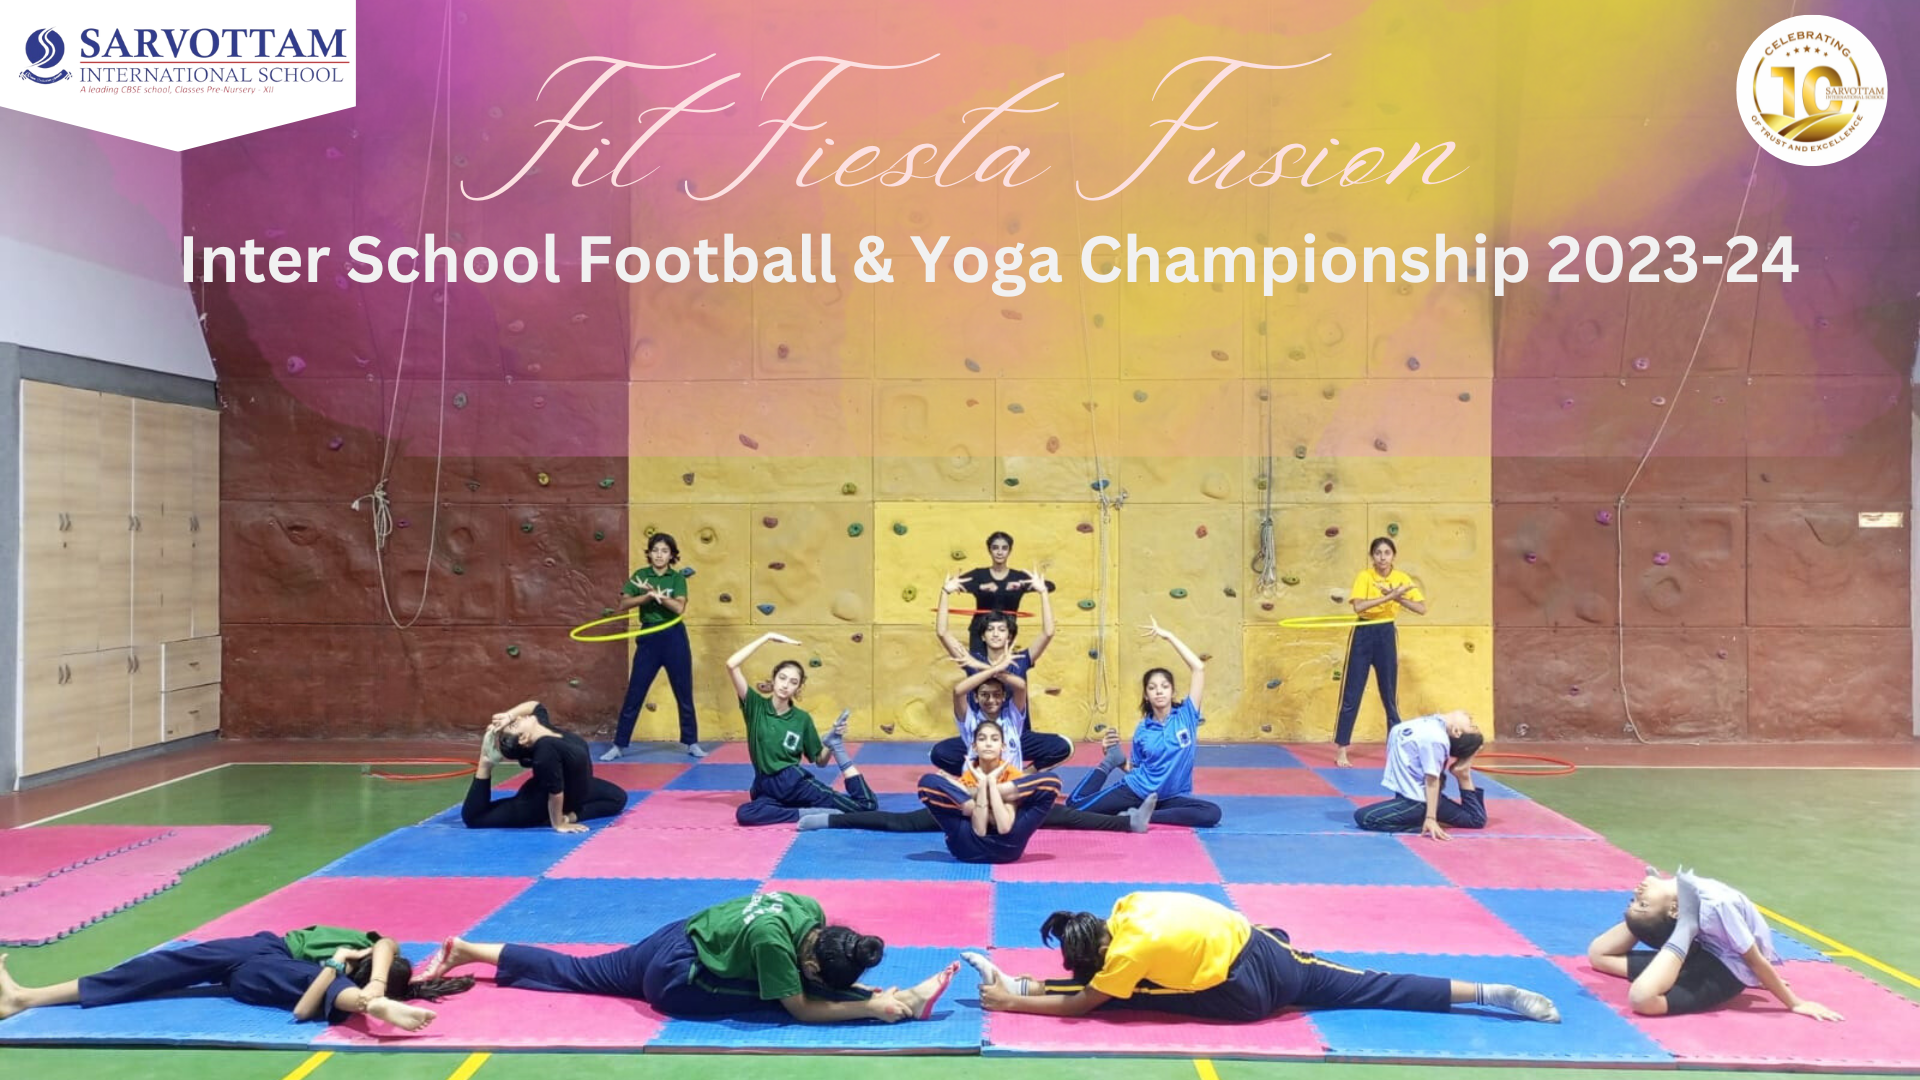 Fit Fiesta Fusion Inter school Football & Yoga Championship